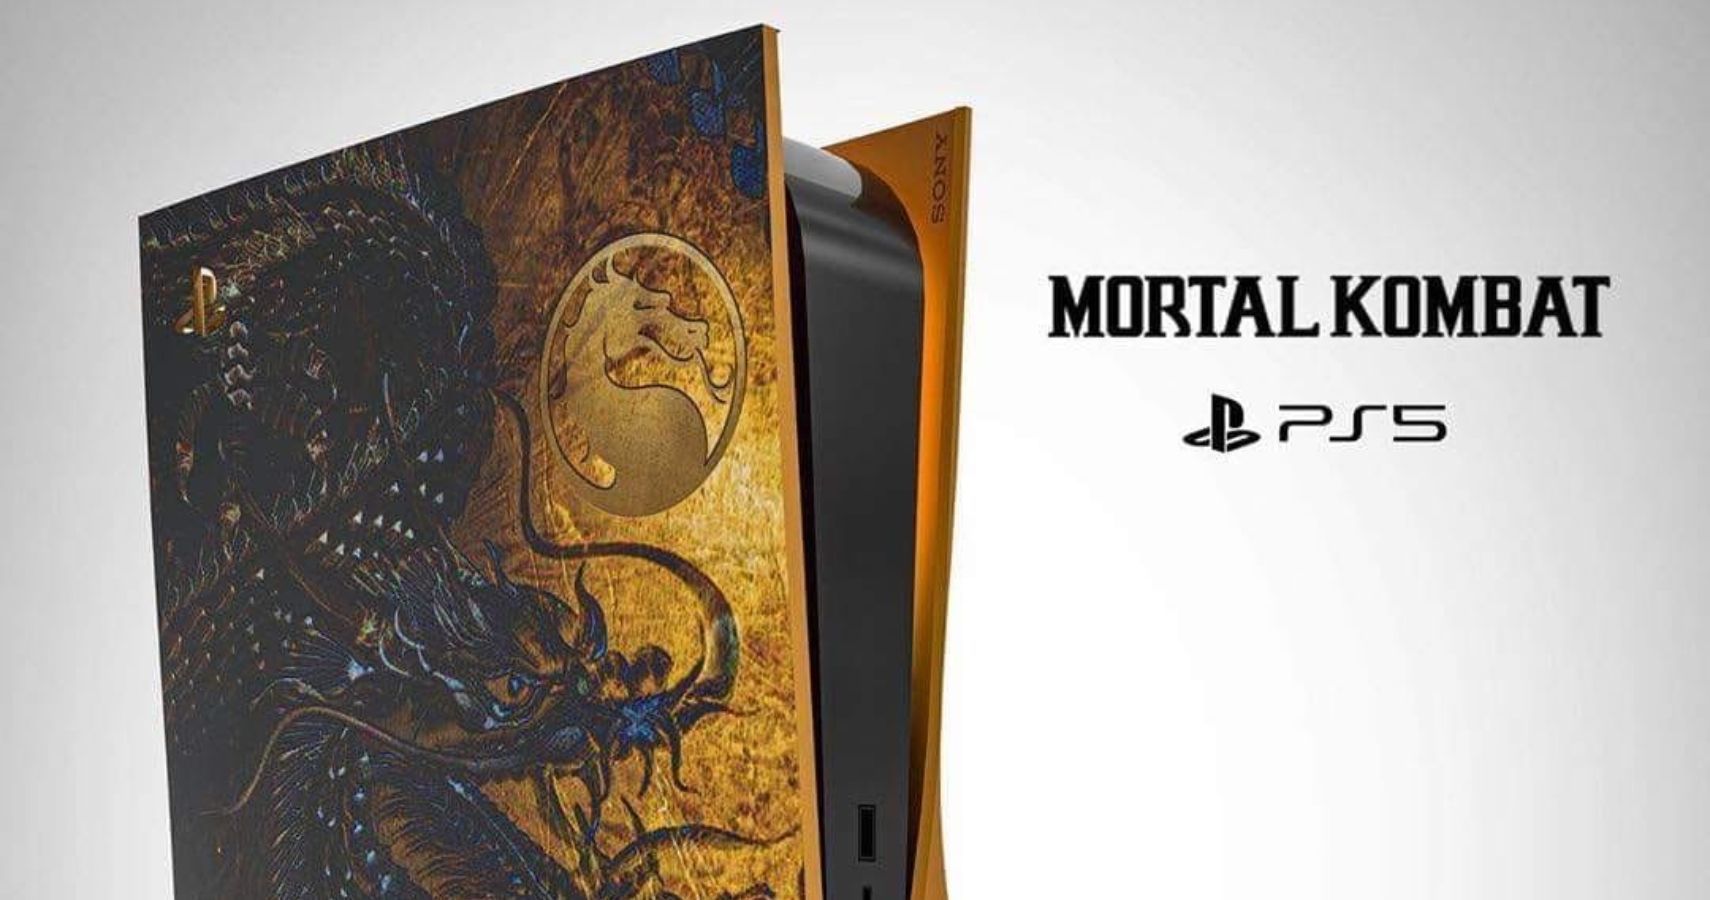 Xbox Pope Reveals Concept Art For Mortal Kombat PS5 Skin